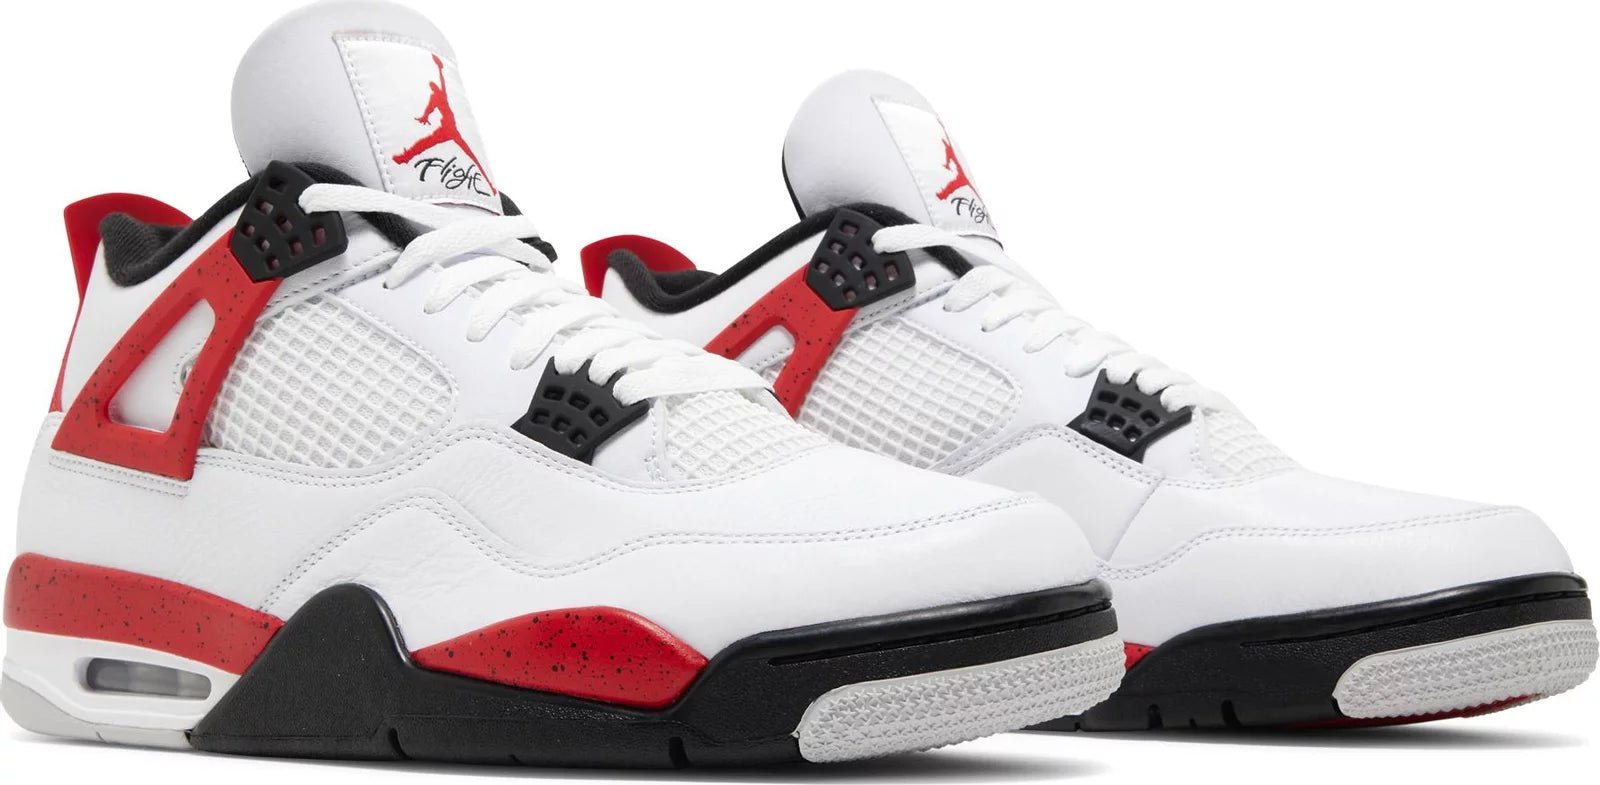 Air Jordan 4 Retro Red Cement - Paroissesaintefoy Sneakers Sale Online